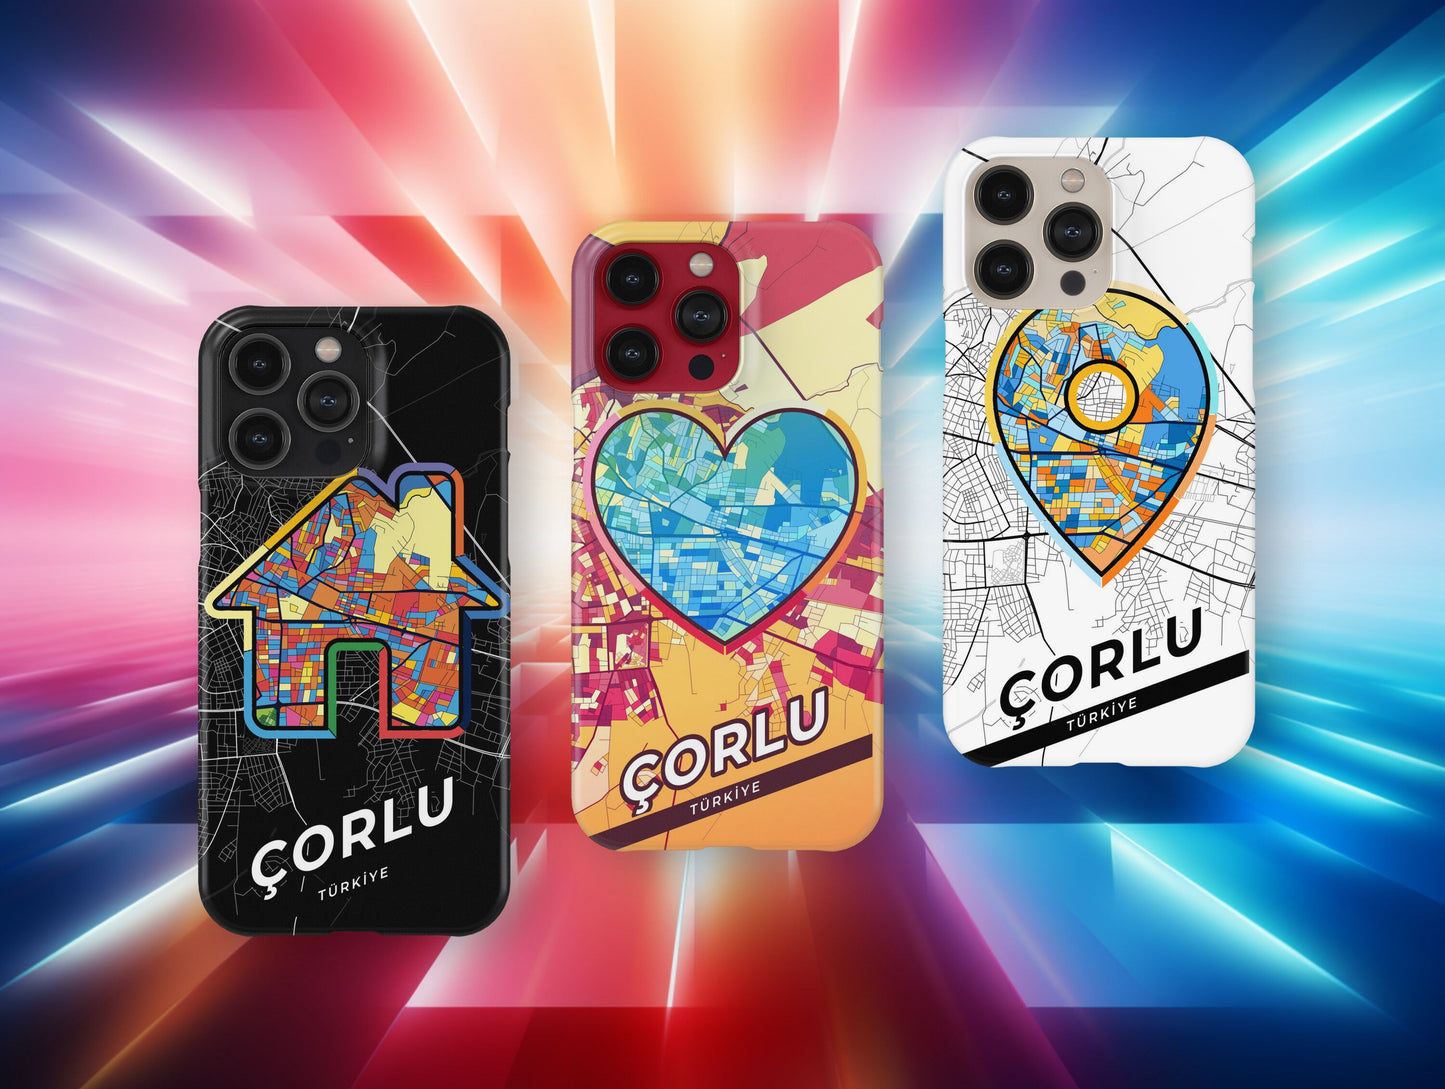 Çorlu Turkey slim phone case with colorful icon. Birthday, wedding or housewarming gift. Couple match cases.